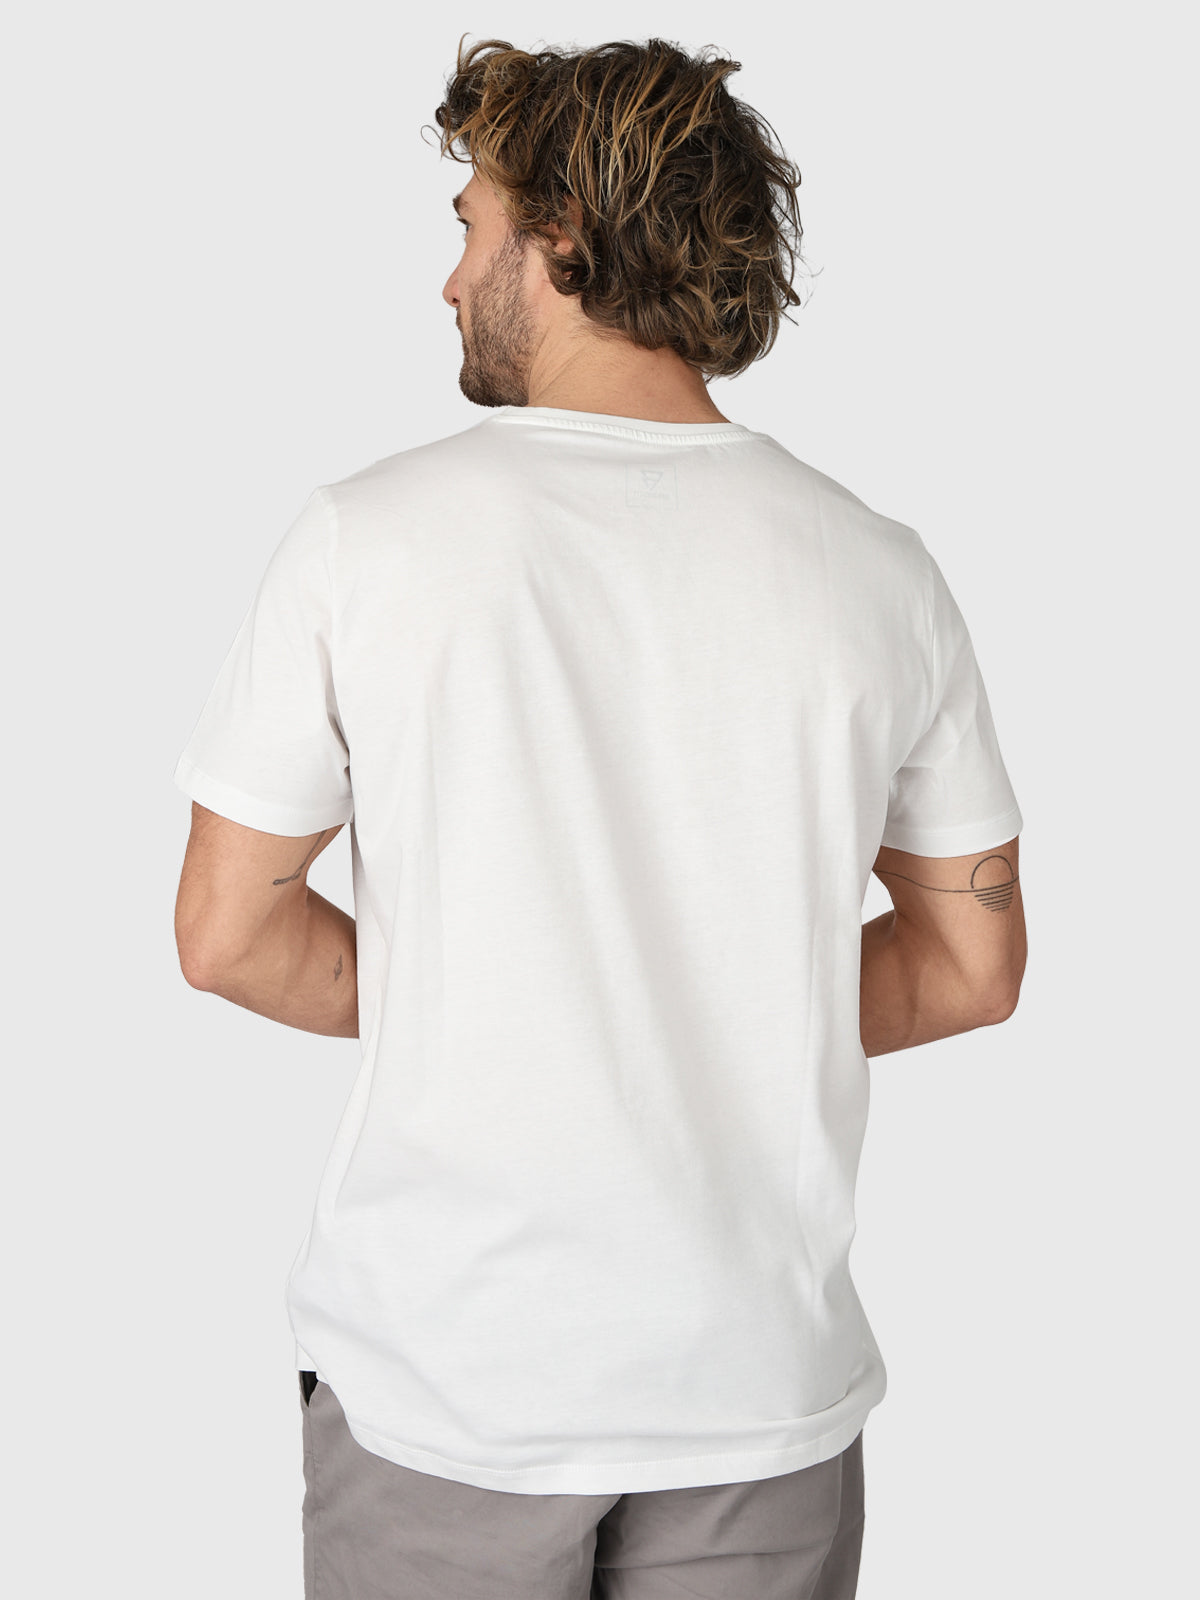 Funhorizon Herren T-Shirt | Weiß